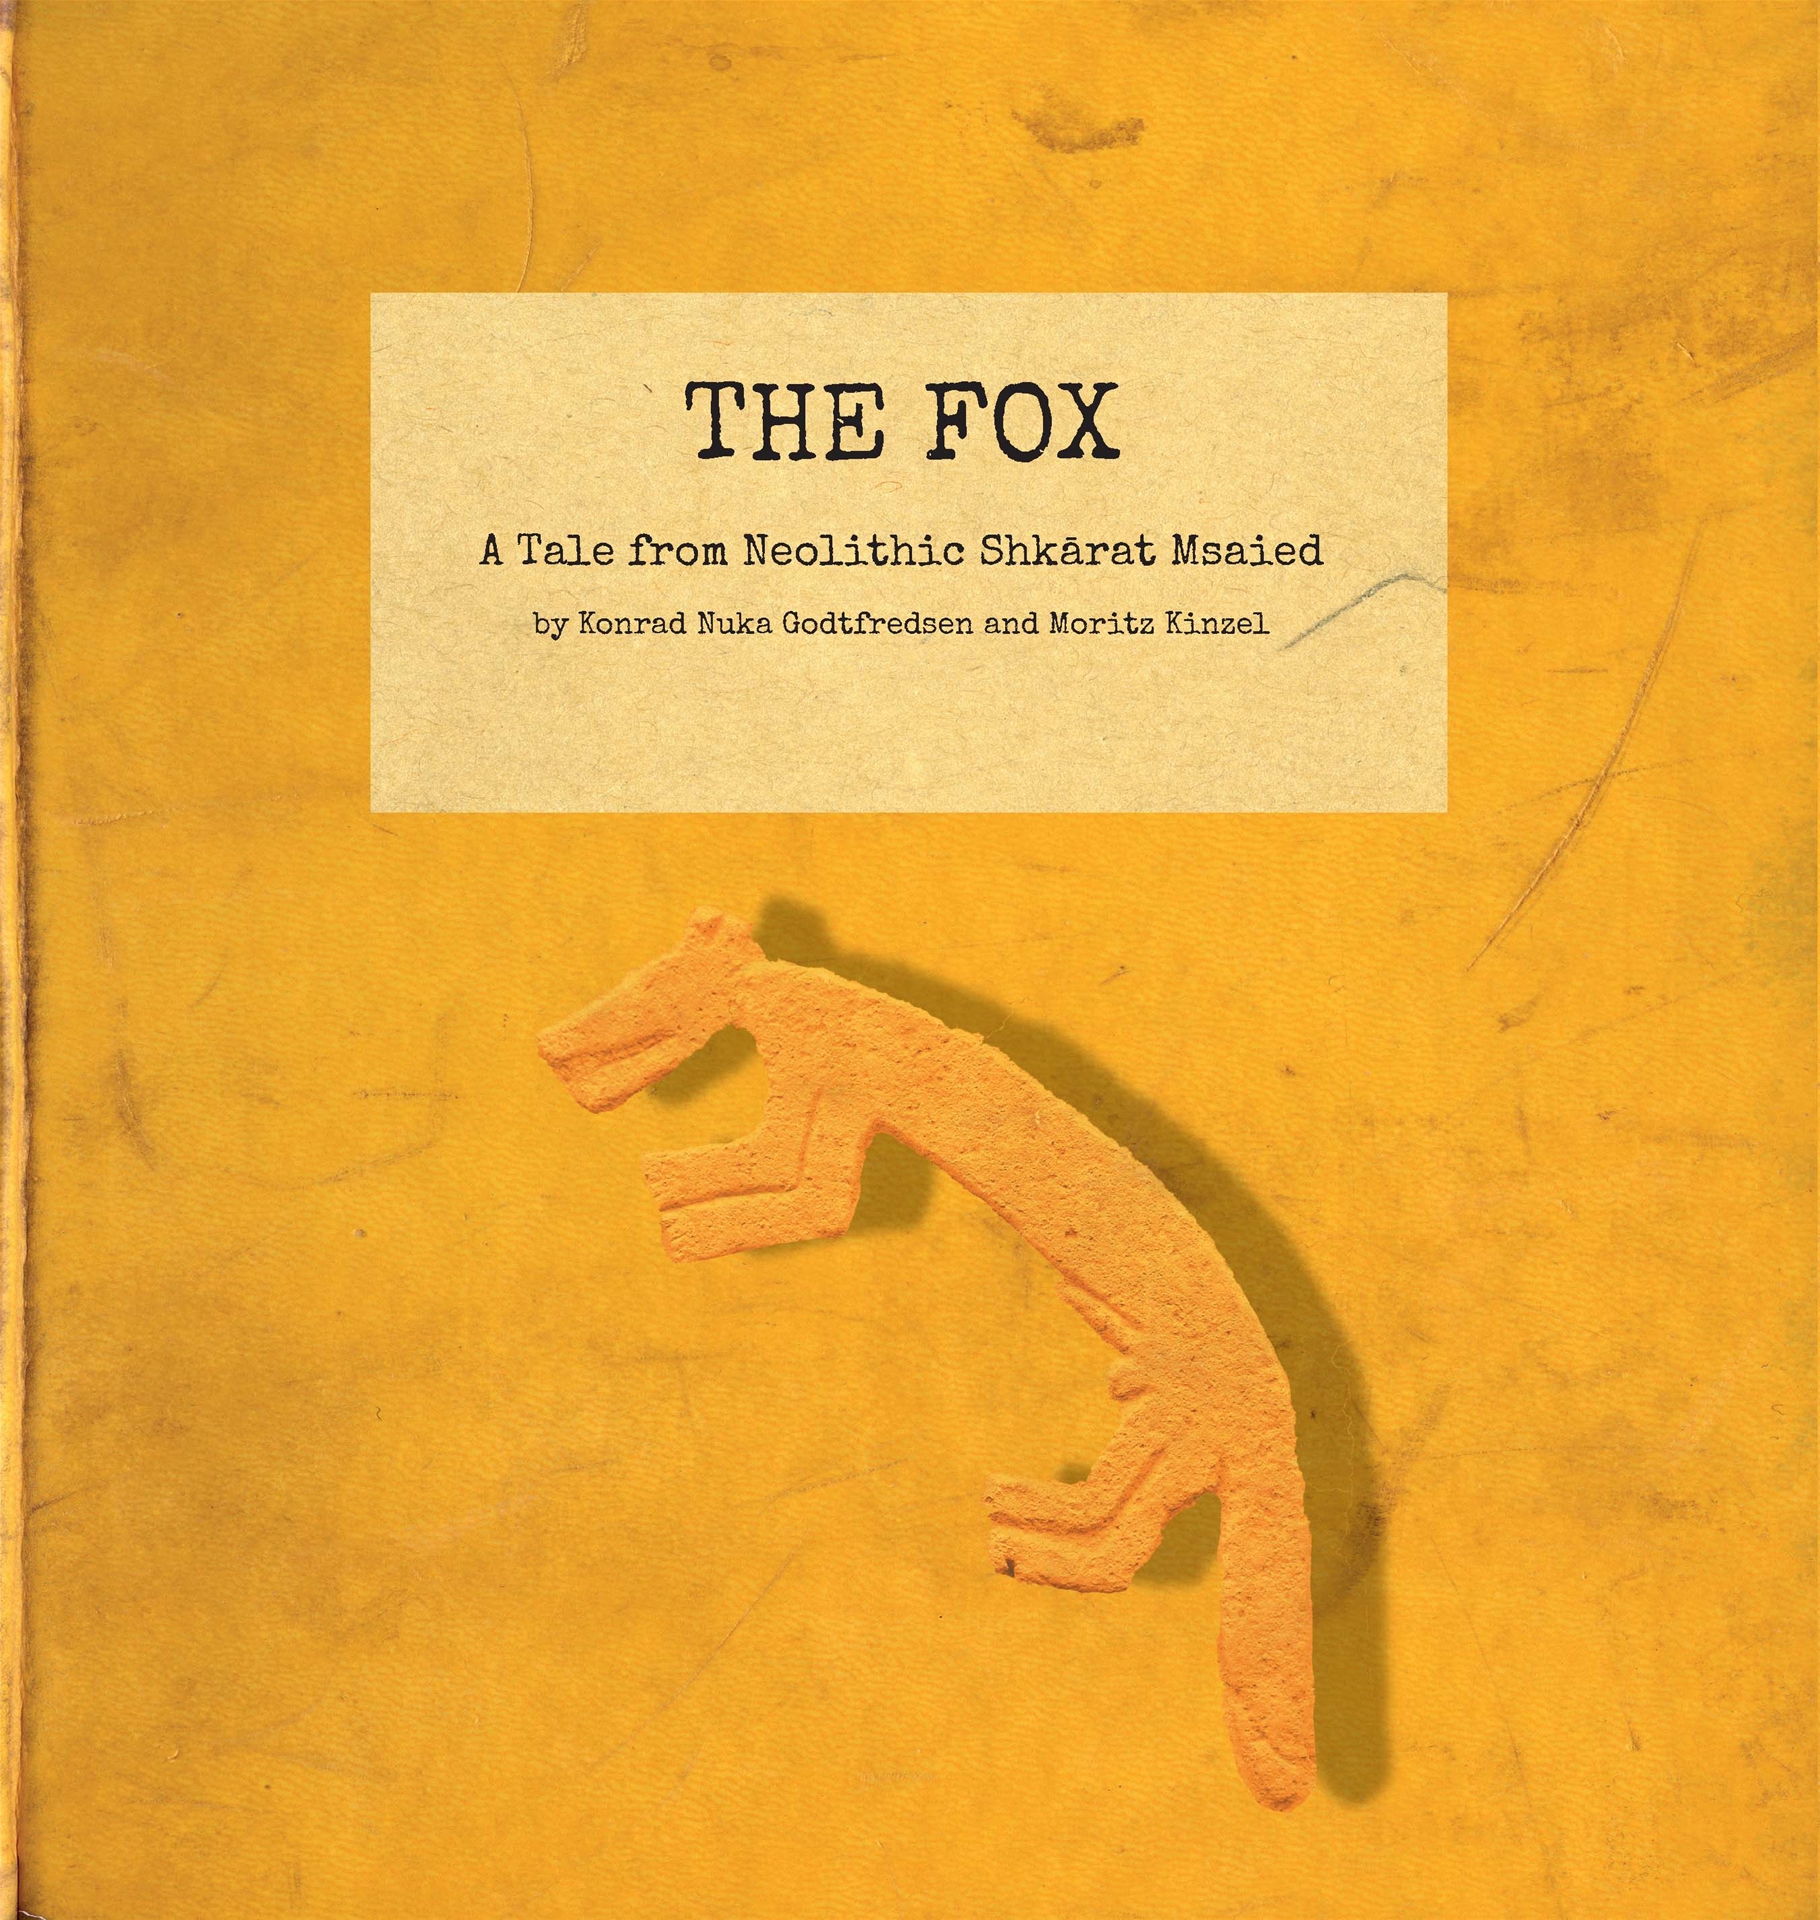 Godtfredsen, Konrad Nuka – Moritz Kinzel; The Fox. A Tale from Neolithic Shkārat Msaied